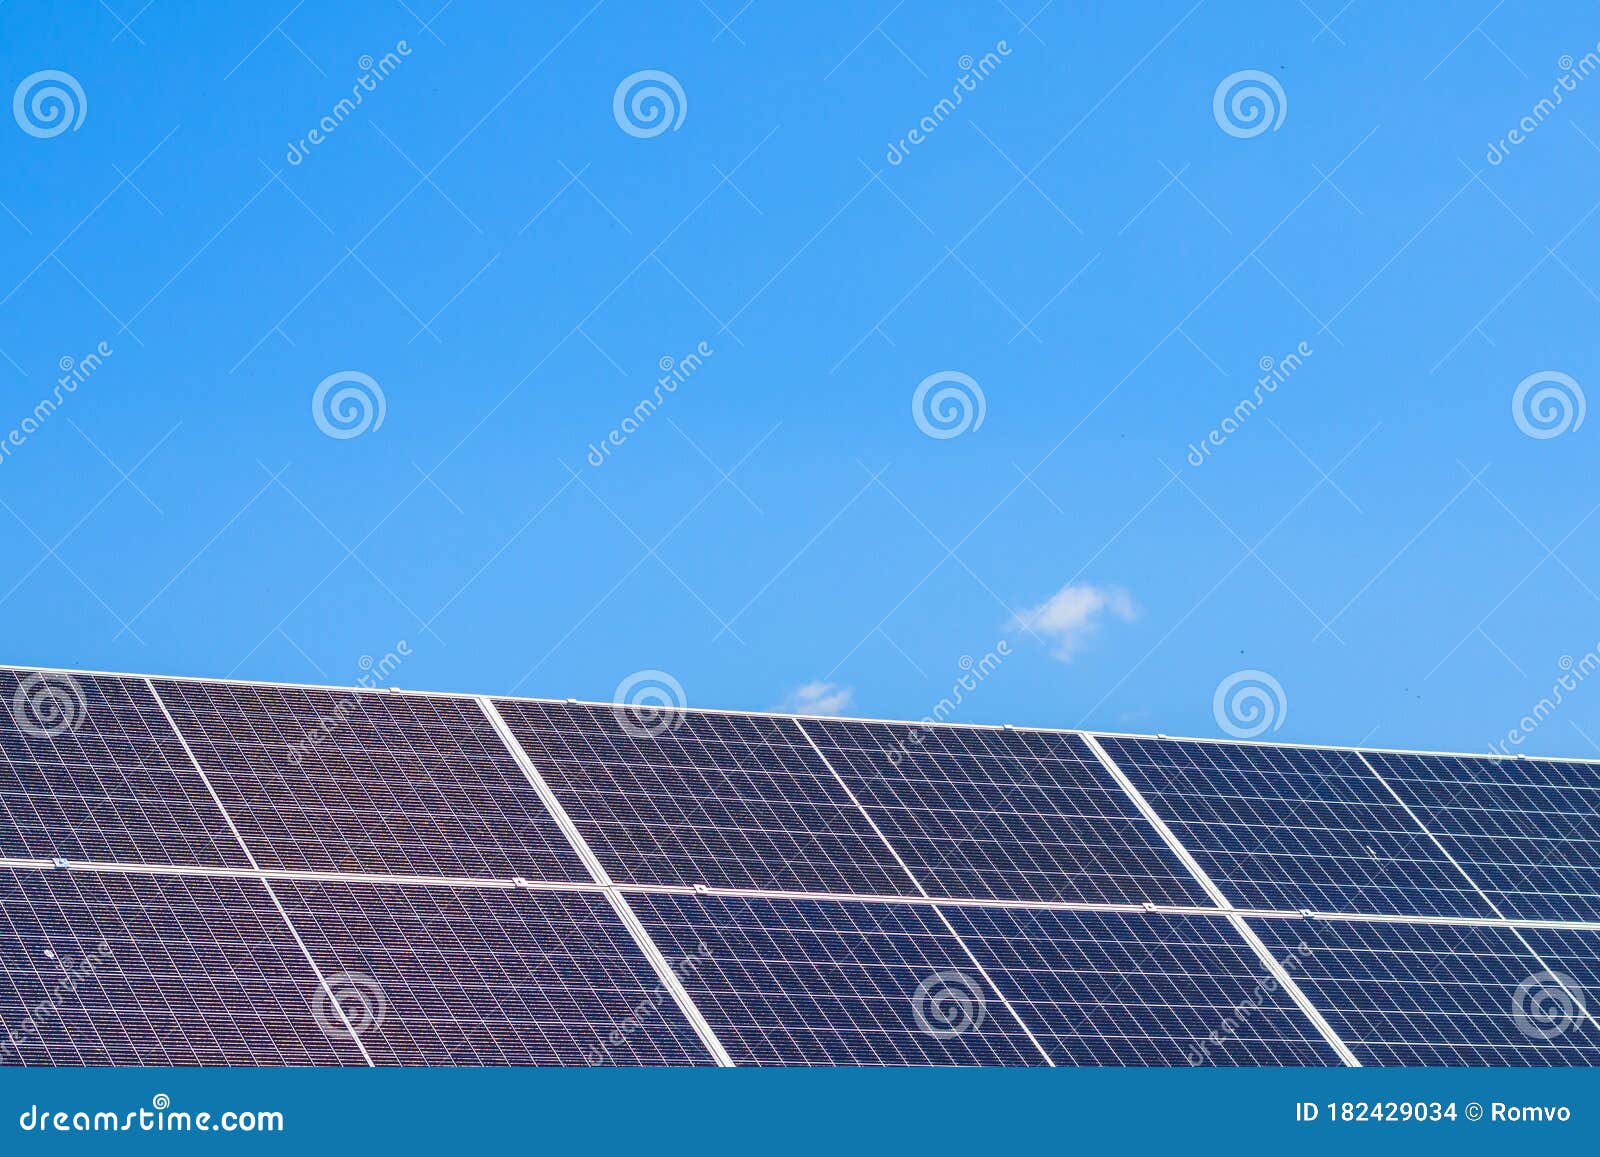 solar panels accumulate green energy